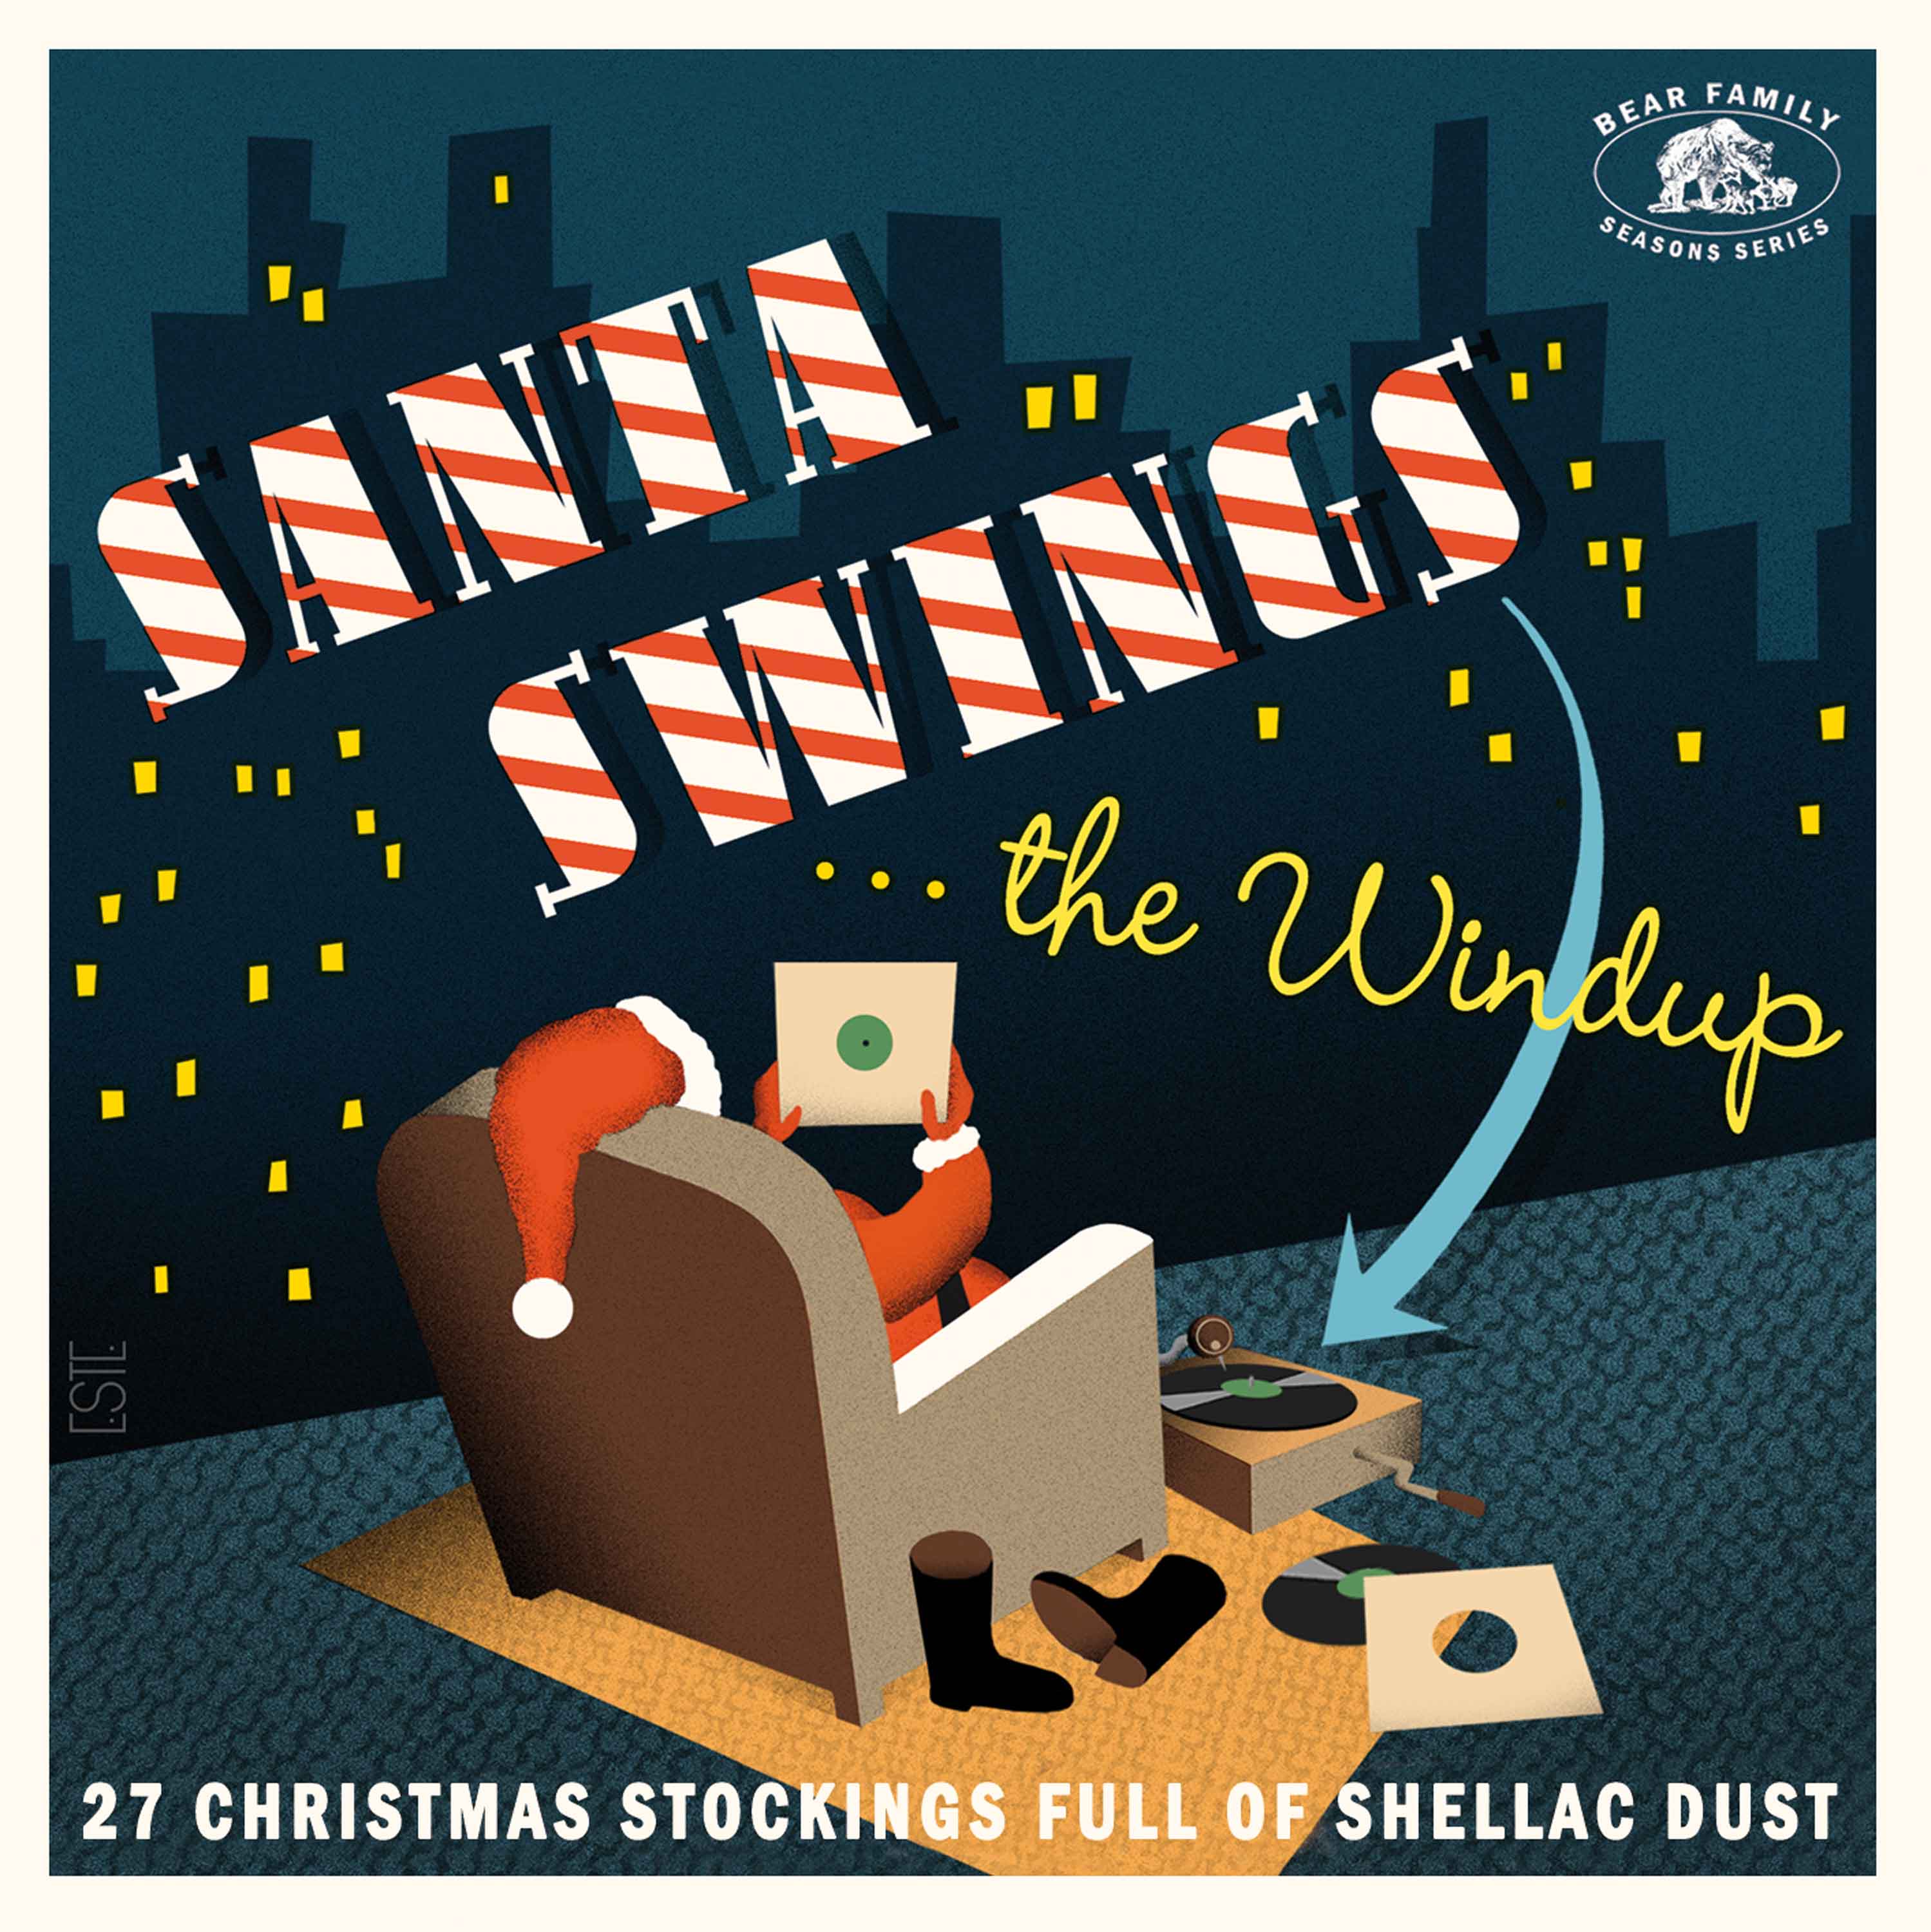 Various - (CD) 27 Greetings Of - Swings Records Bear Family Windup Season\'s Christmas - The Dust Shellac Santa Stockings Full CD